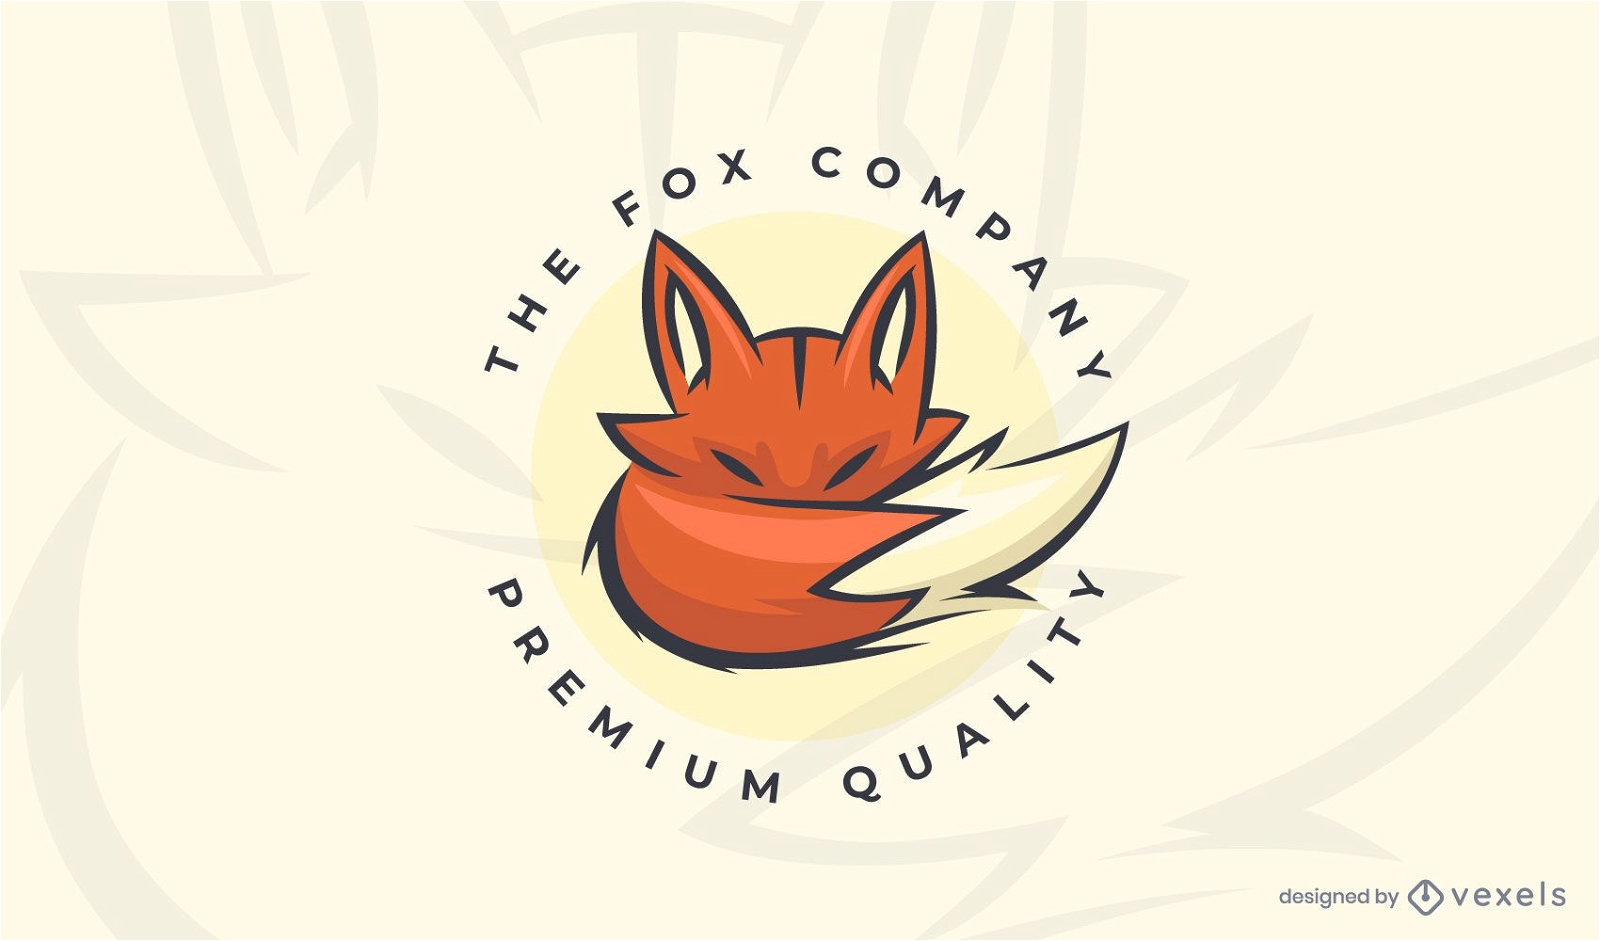 The fox company logo template